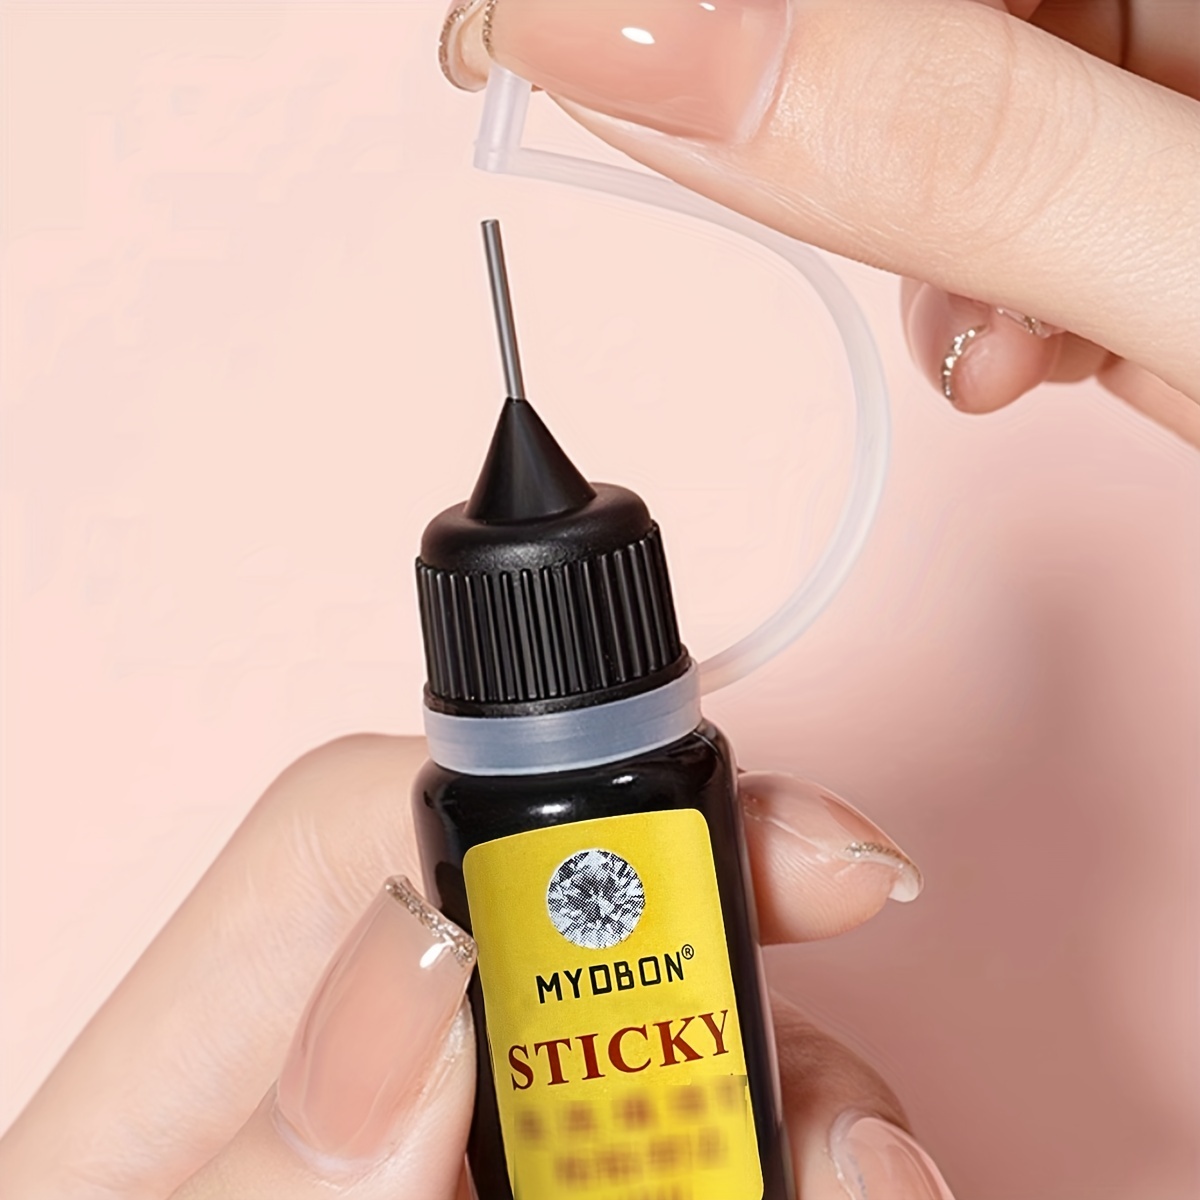 Rhinestone Glue for Nail, No Wipe Nail Gem Glue, Super Strong Adhesive Glue